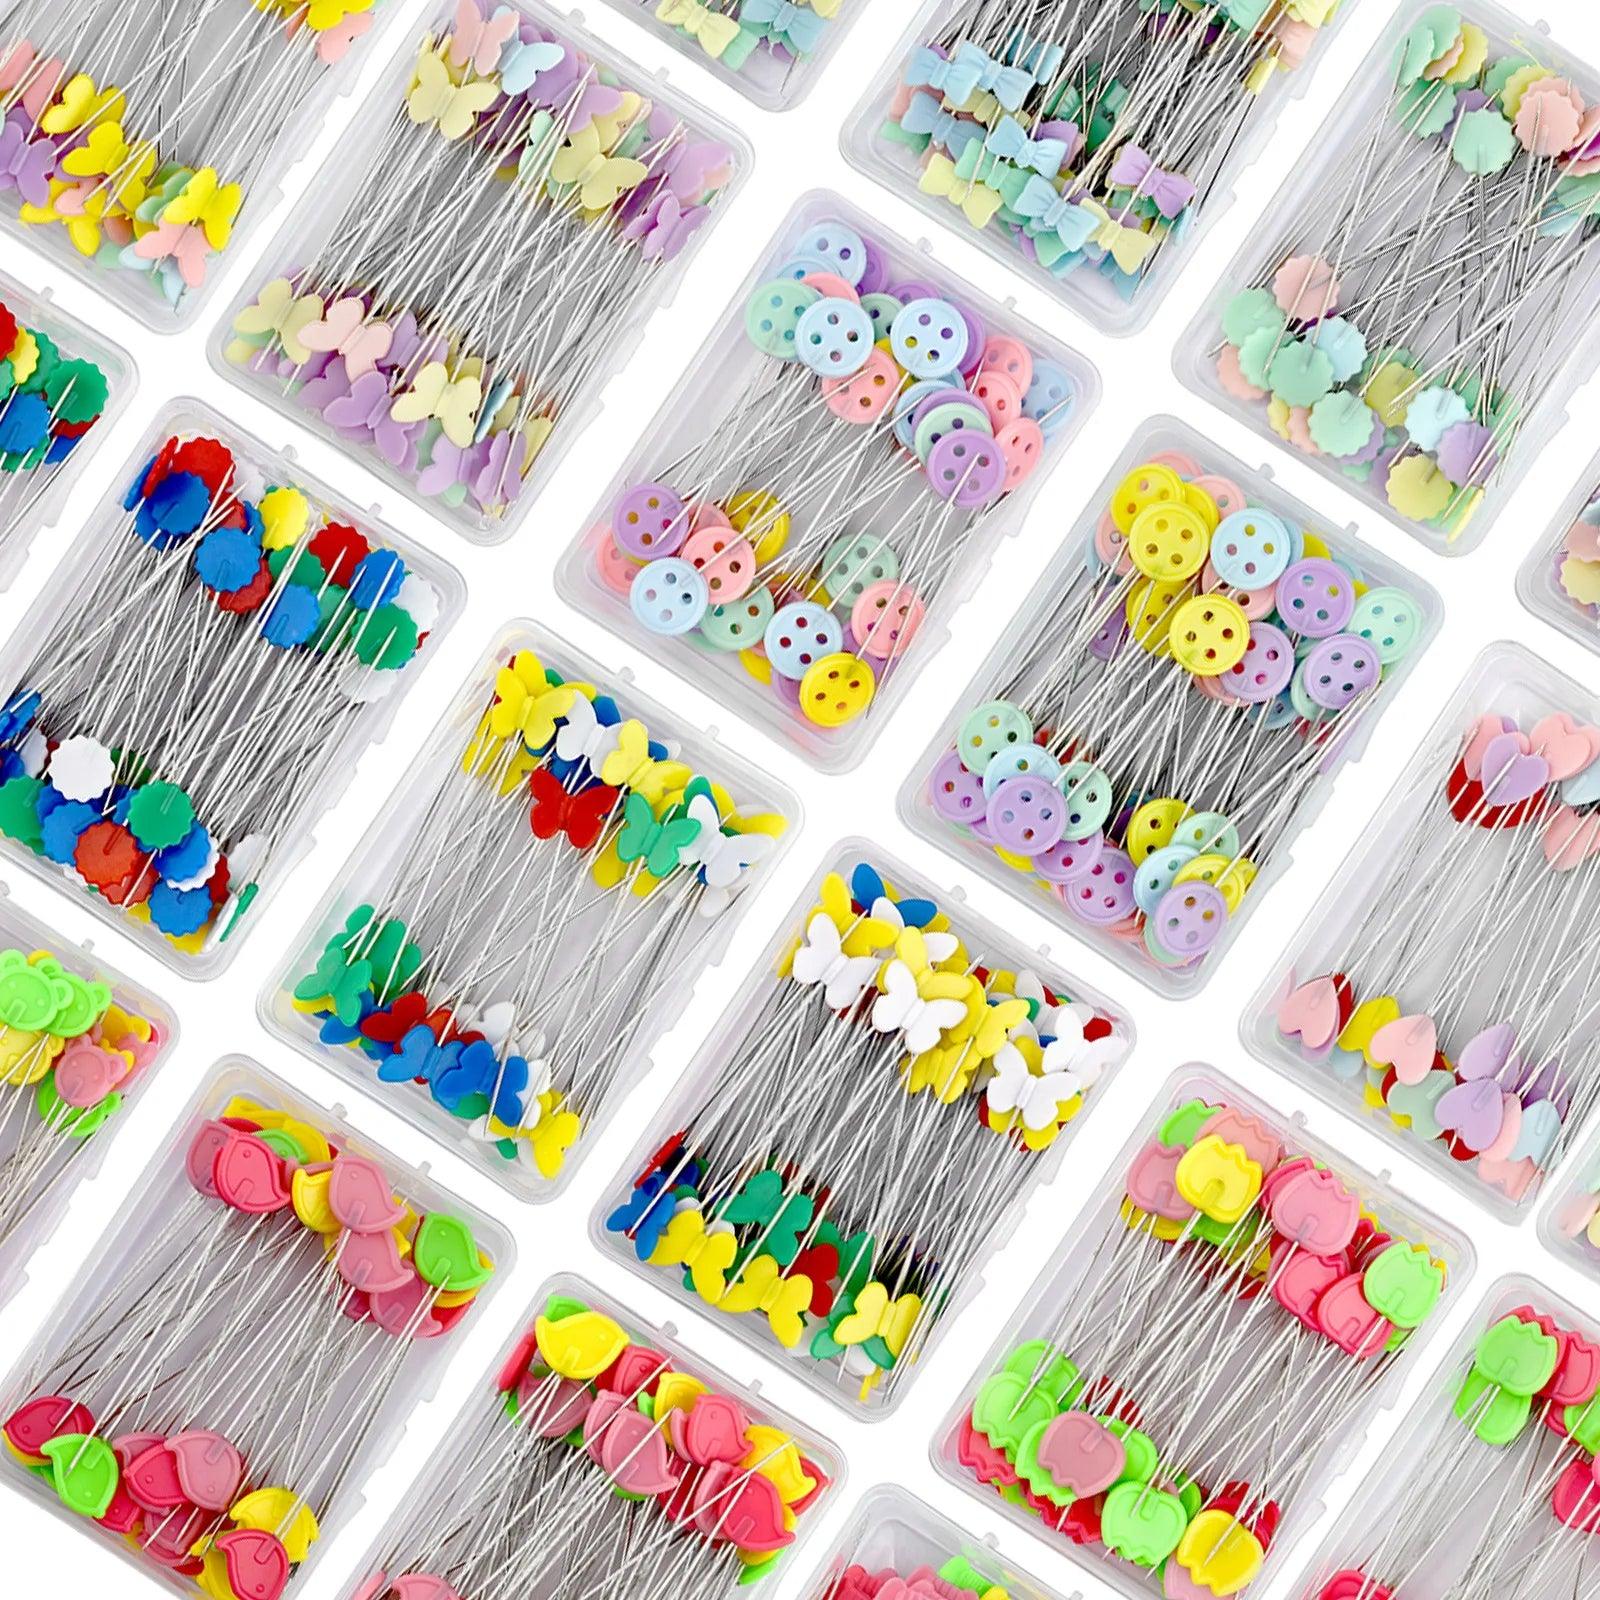 50/100pcs Colorful Dressmaking Pins Set for Embroidery, Patchwork & DIY  ourlum.com   